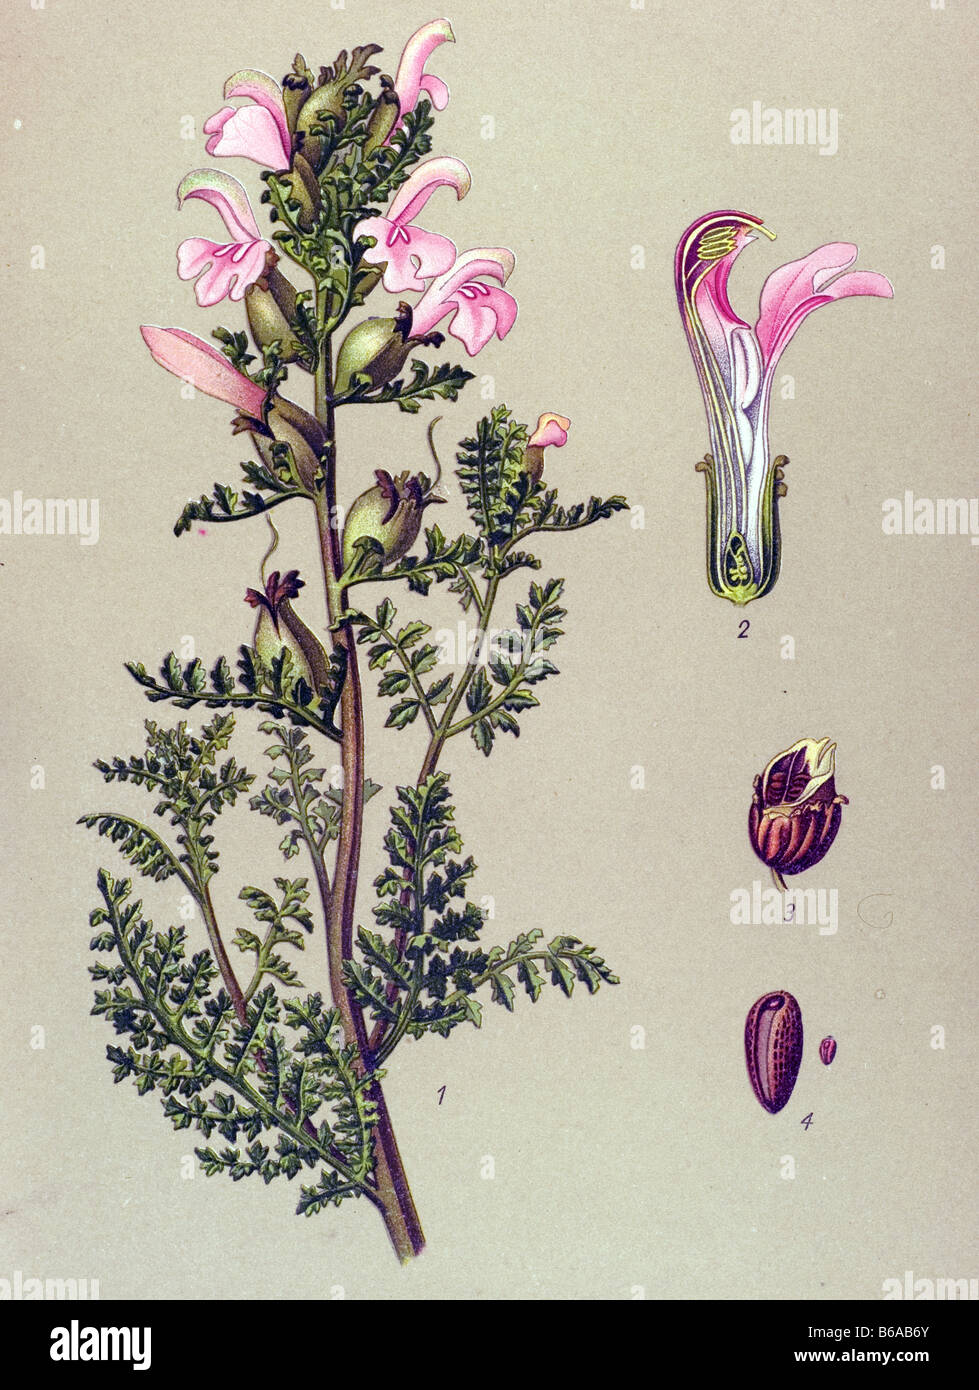 Marsh Lousewort, Pedicularis palustris poisonous plants illustrations Stock Photo